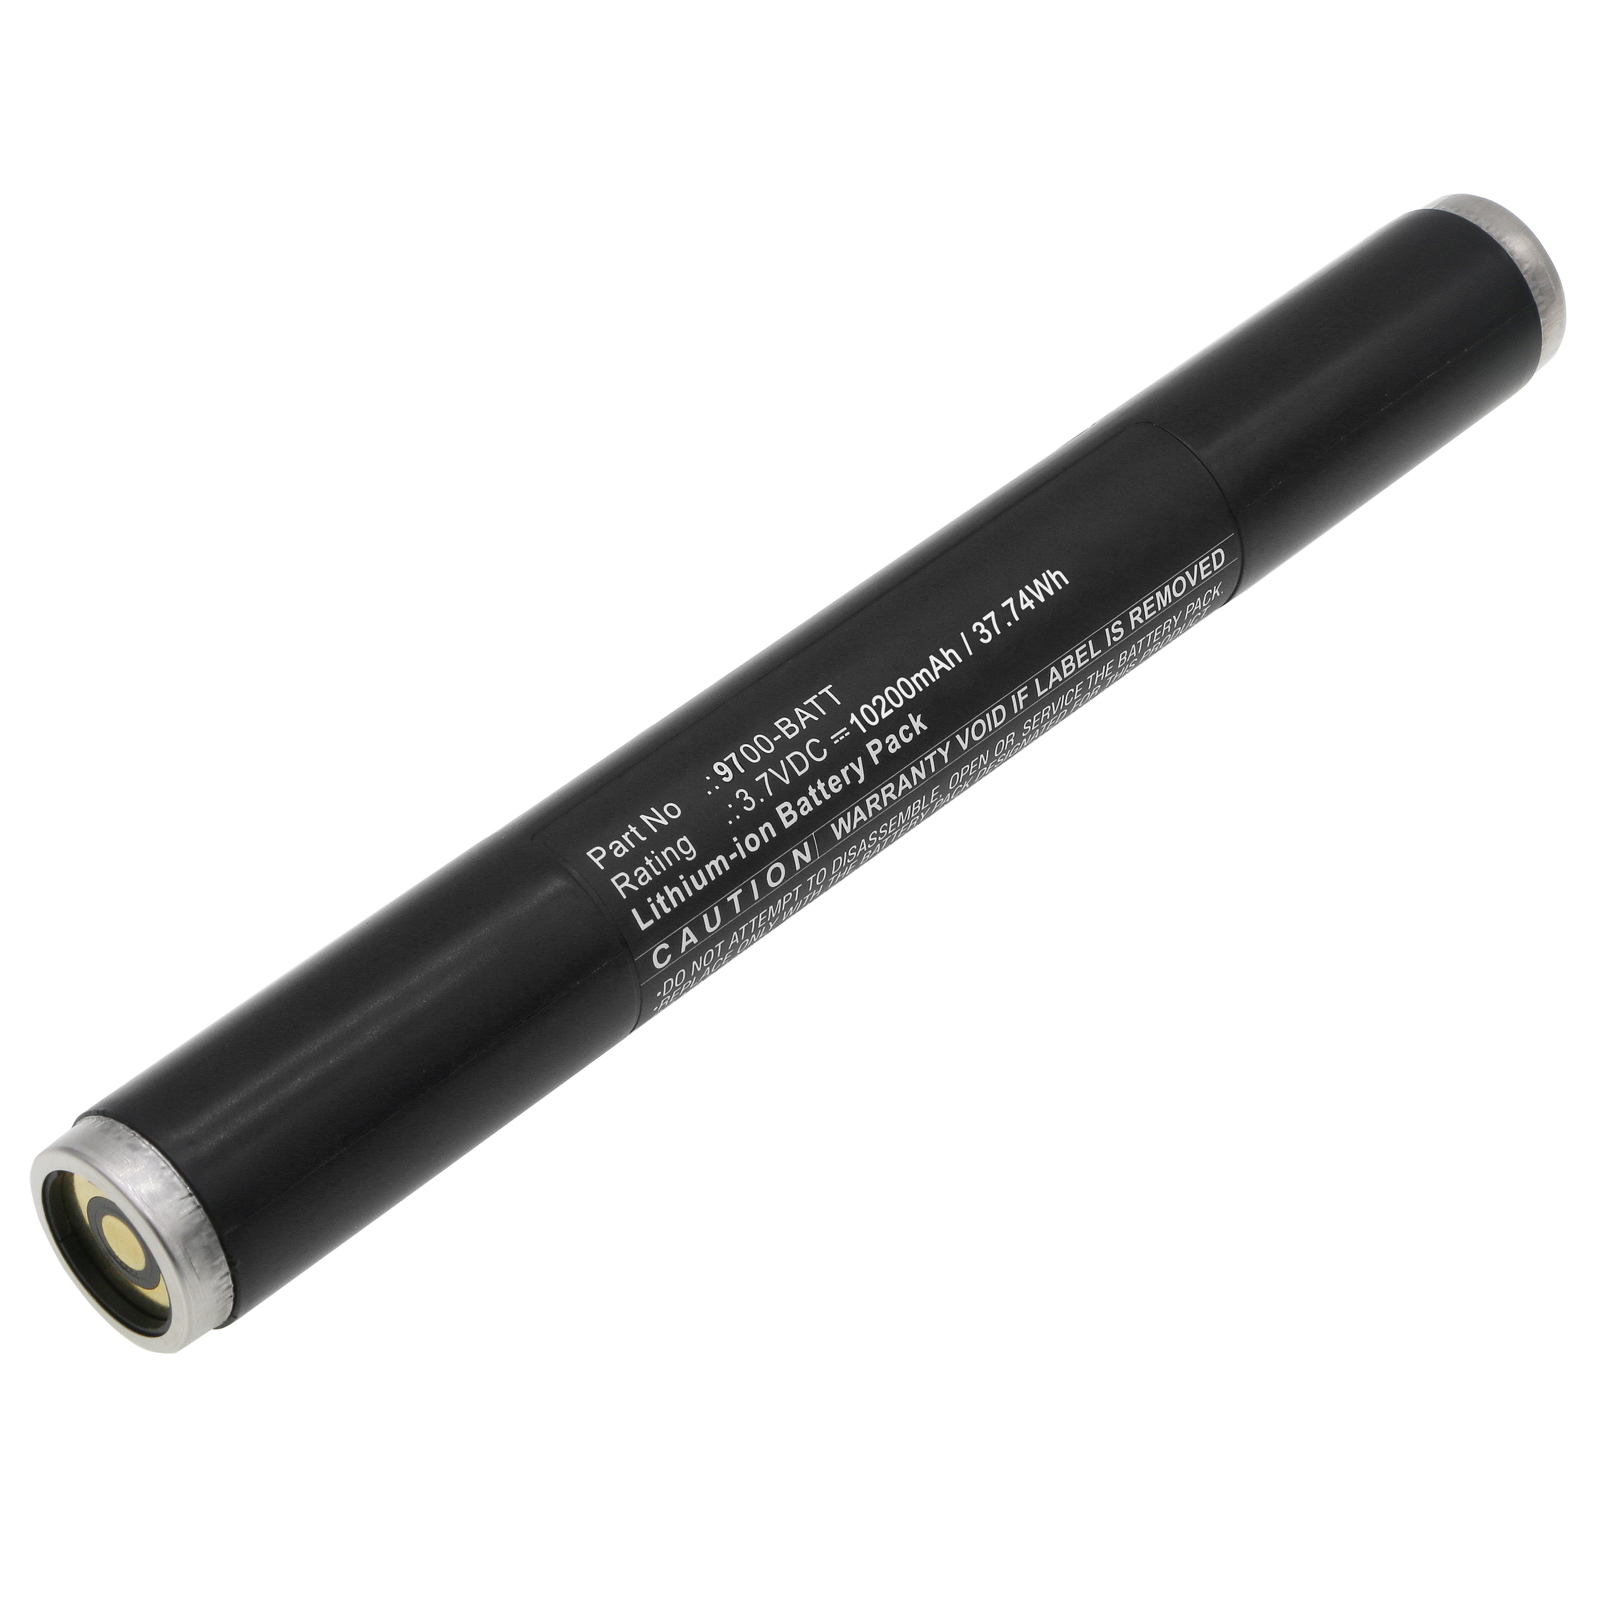 Synergy Digital Flashlight Battery Compatible with Nightstick 9700-BATT Flashlight Battery (Li-ion, 3.7V, 10200mAh)